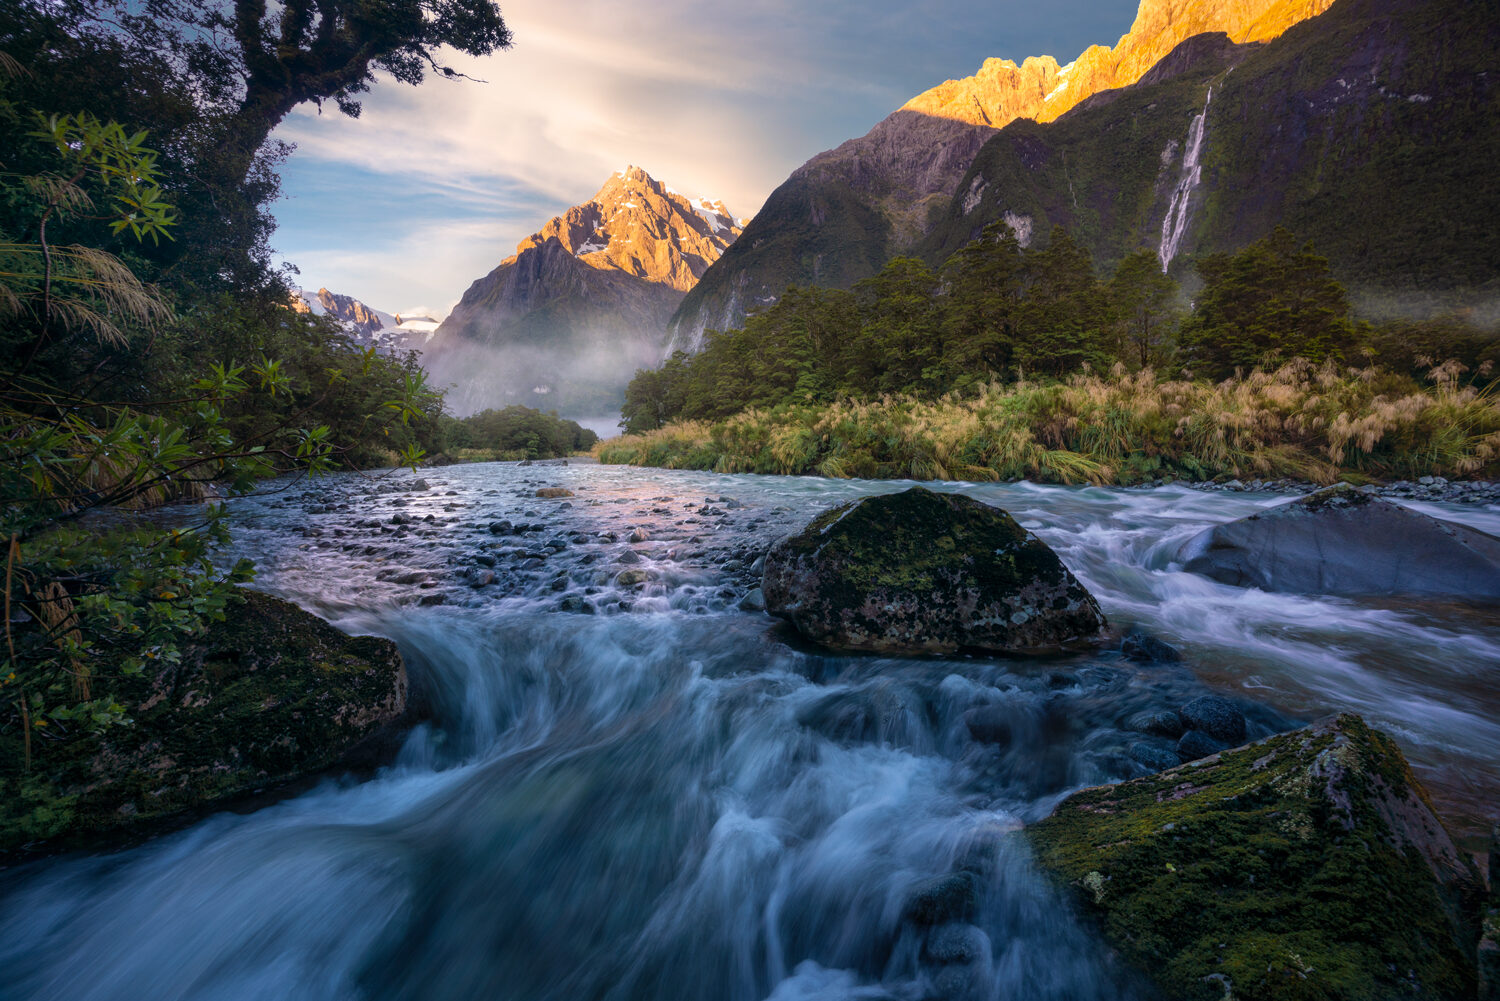 Mountain and river scene, Fiordland New Zealand.